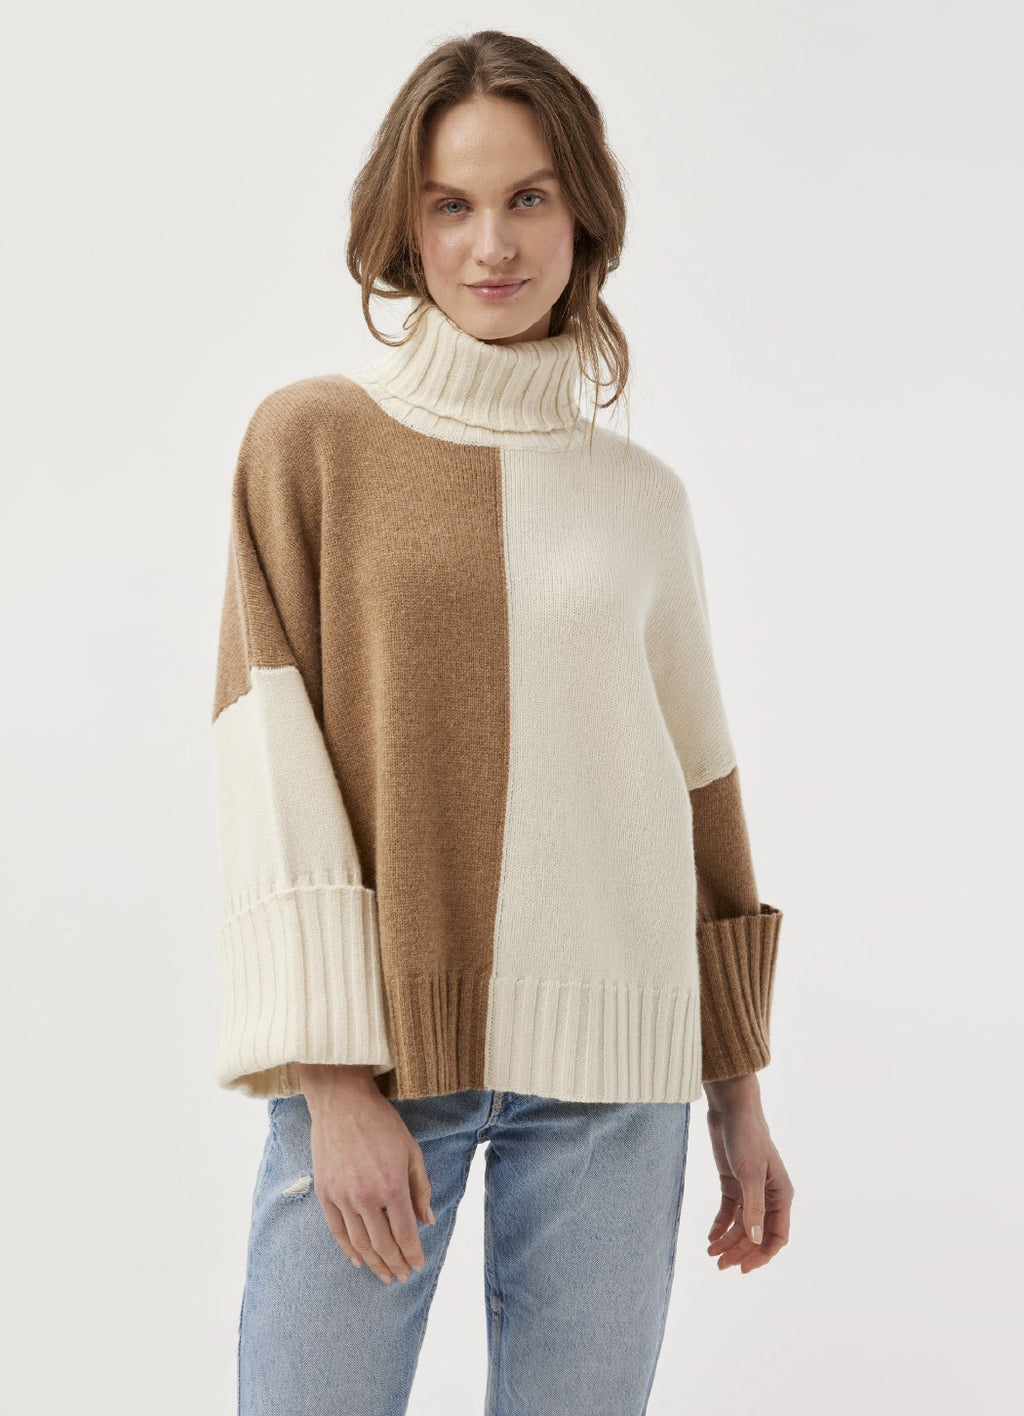 Mila Paloma Wool Turtleneck Sweater